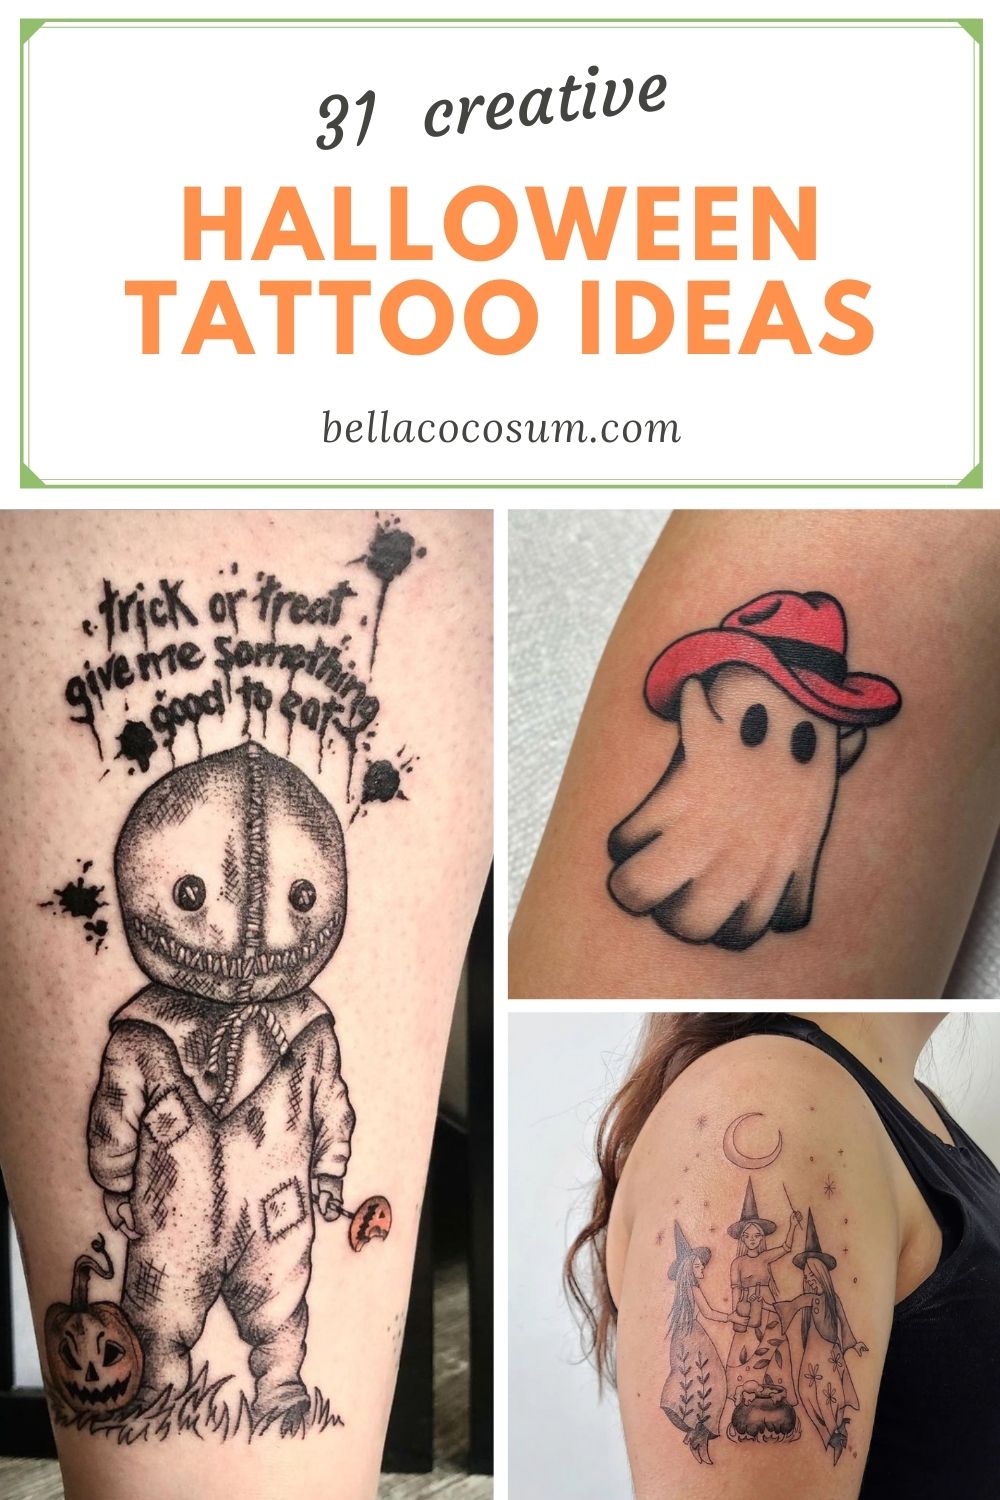 31 Creative Halloween tattoo ideas To Enjoy The Holiday Atmosphere